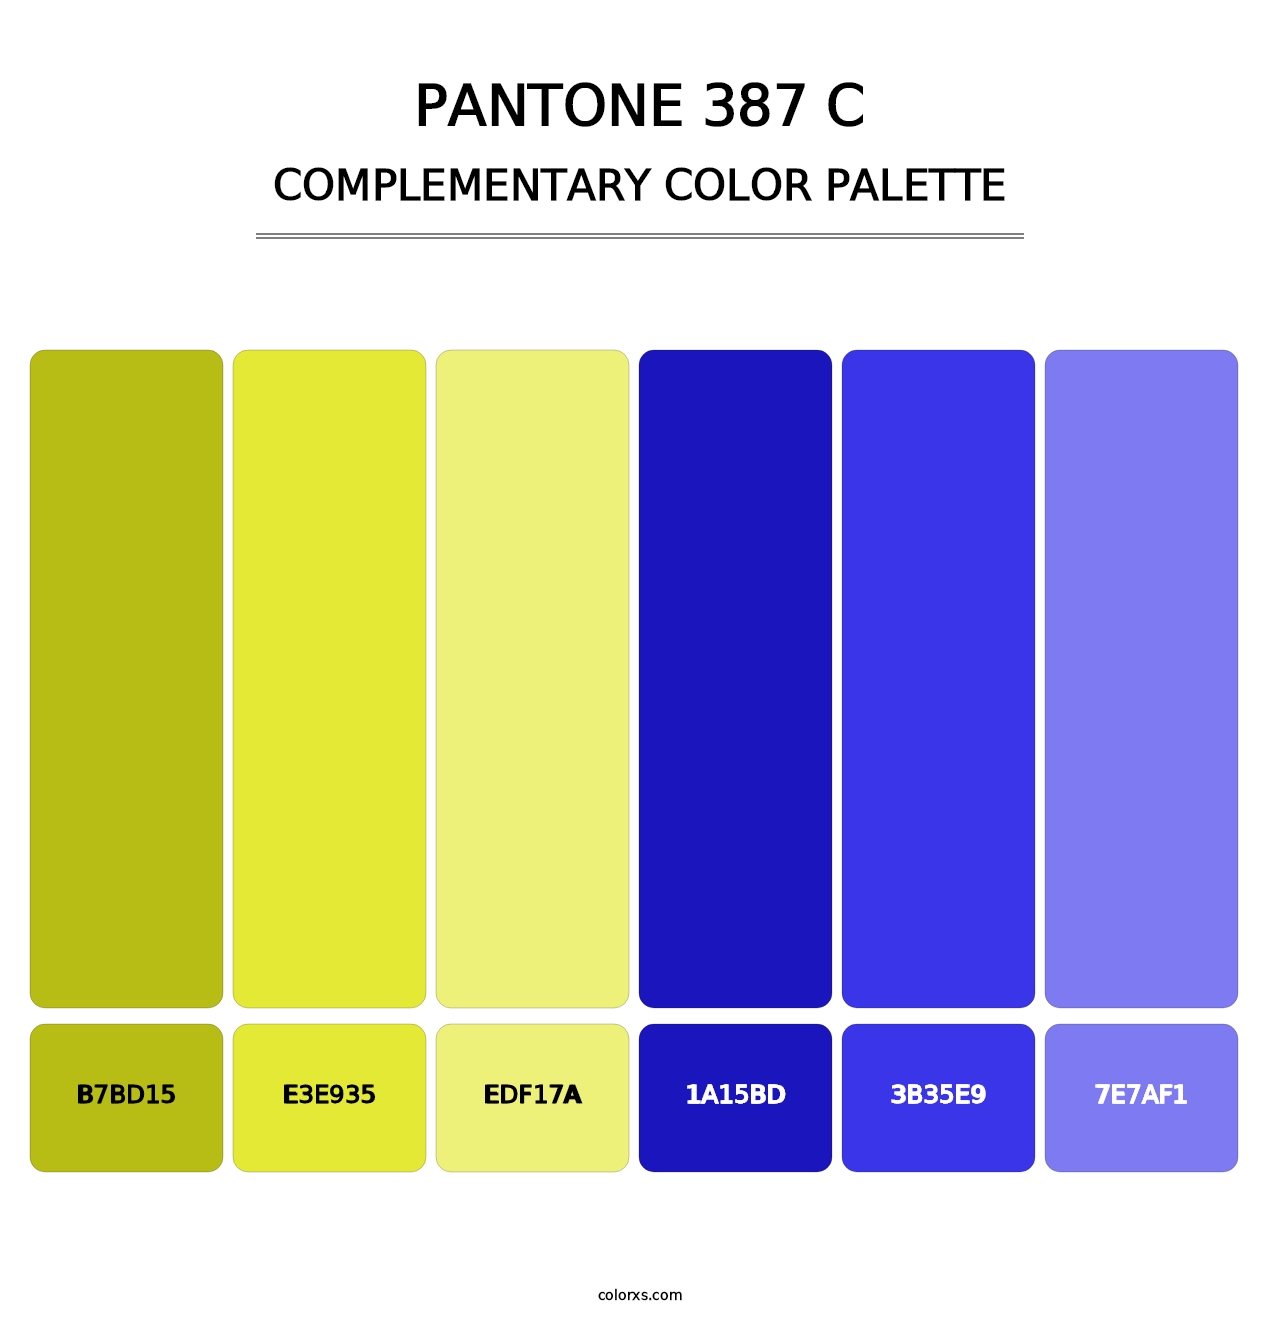 PANTONE 387 C - Complementary Color Palette